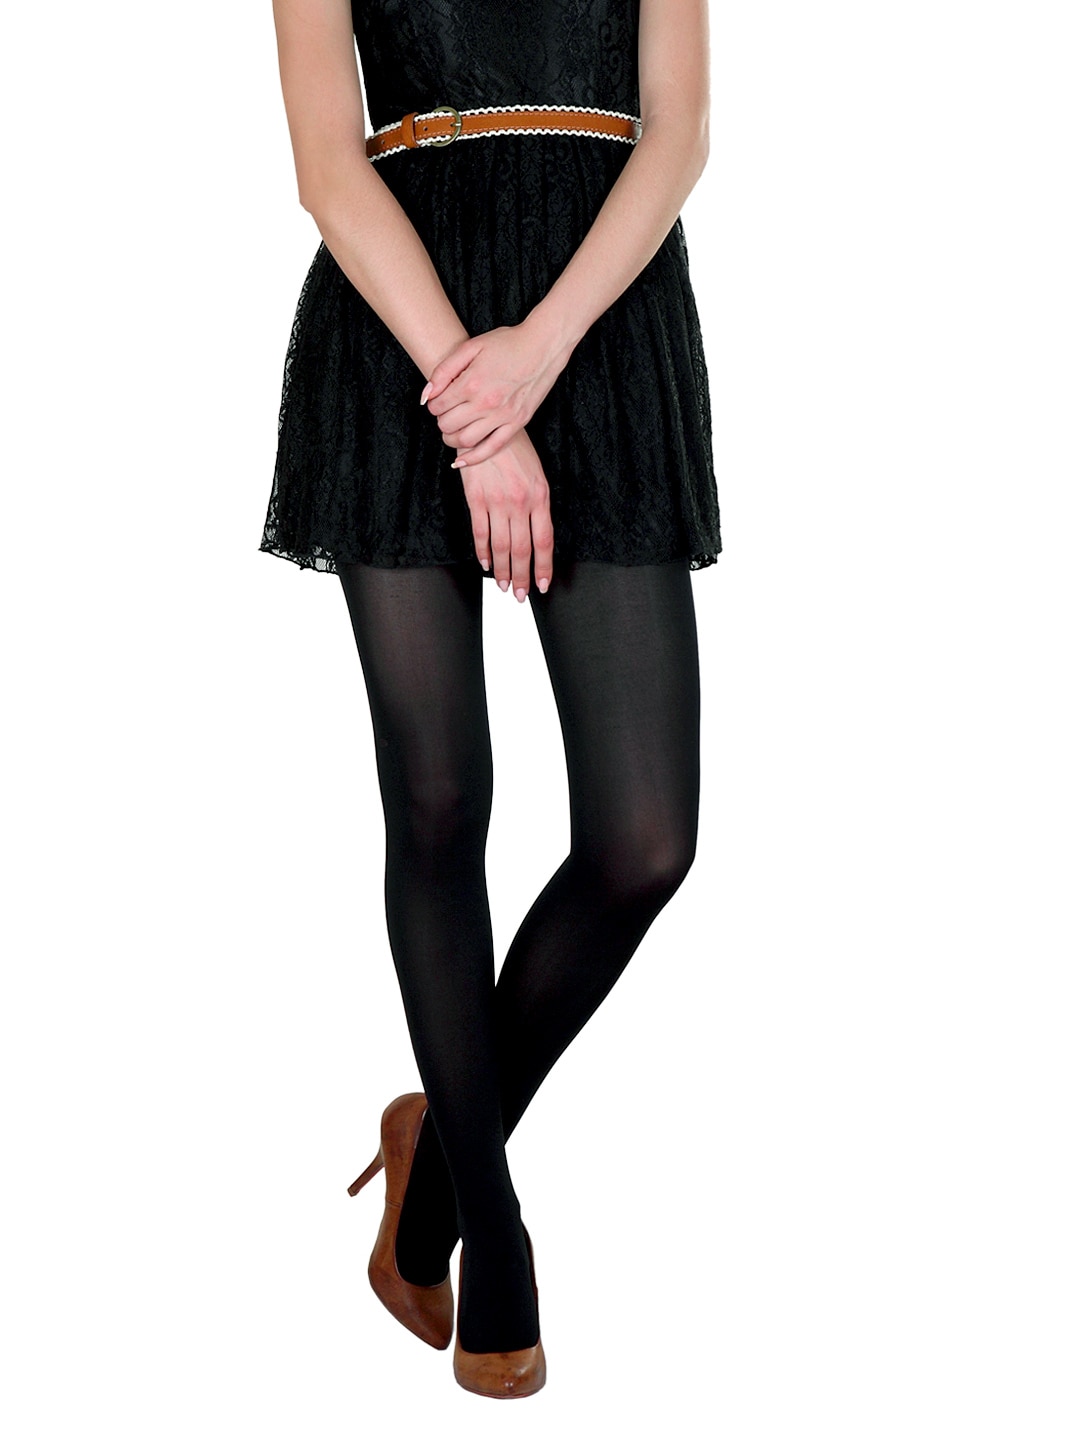 Femella Women Black Stockings